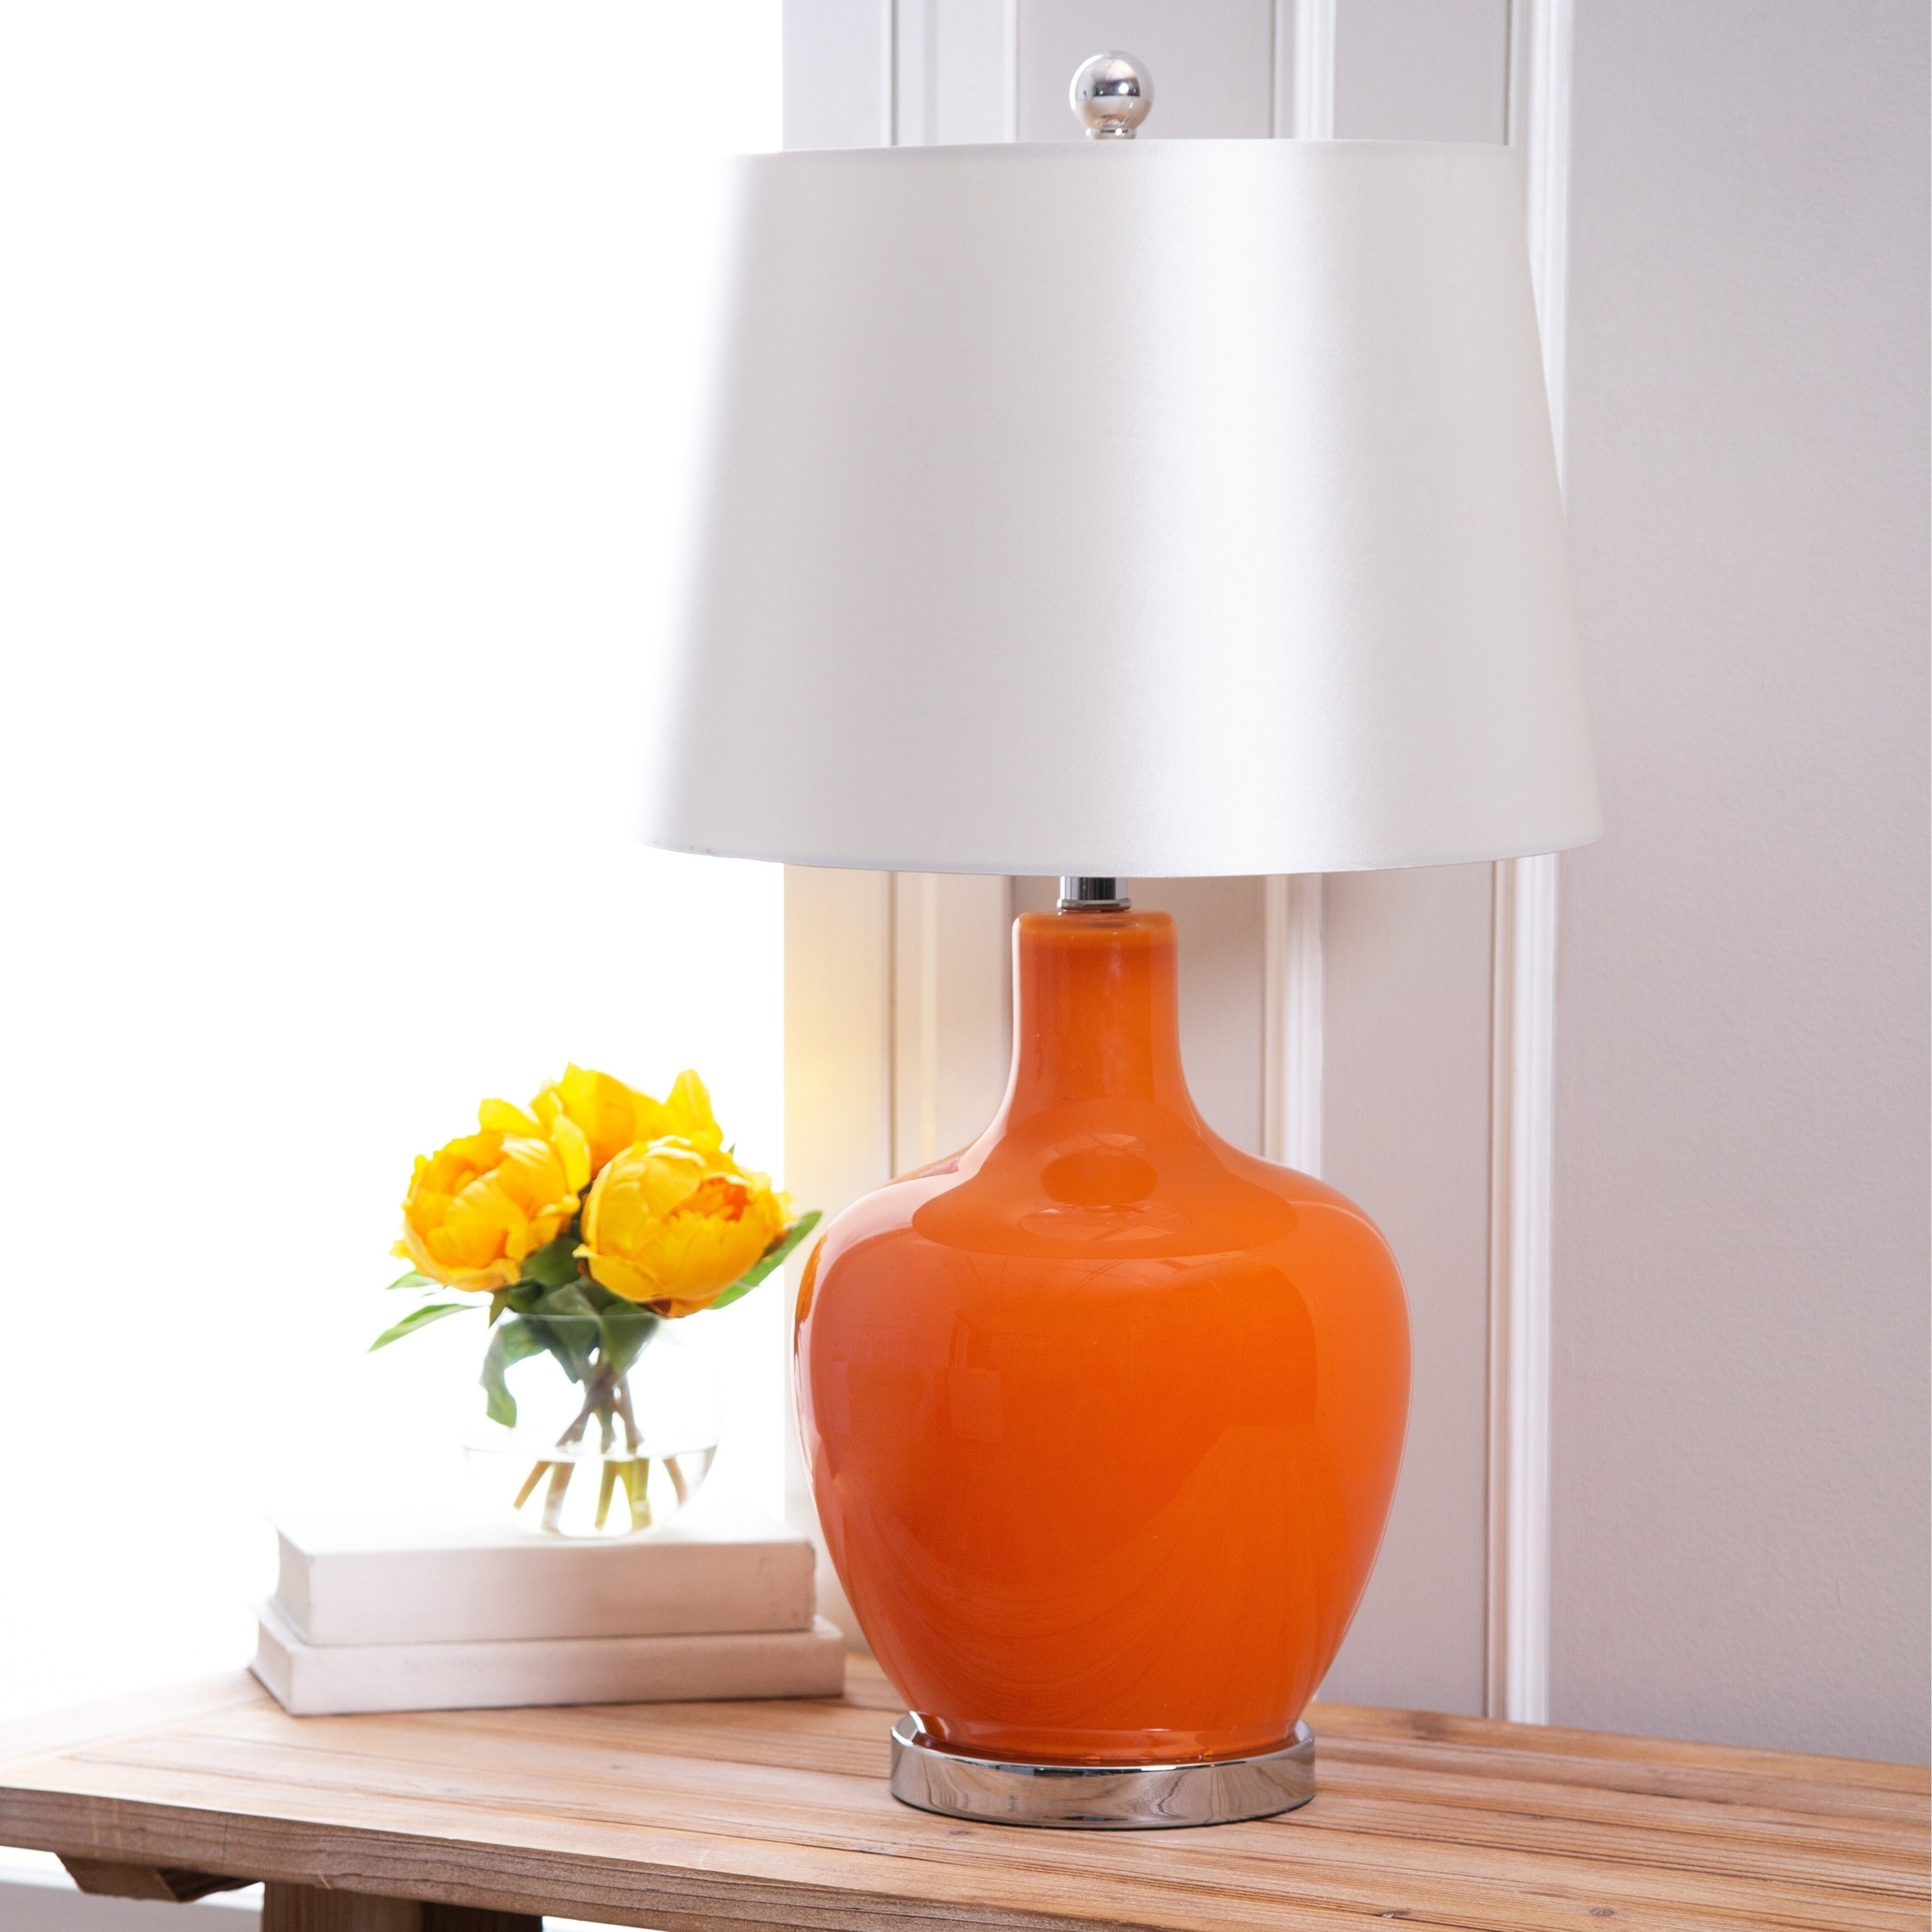 Abbyson faremont orange glass 24 inch table lamp orange ebay